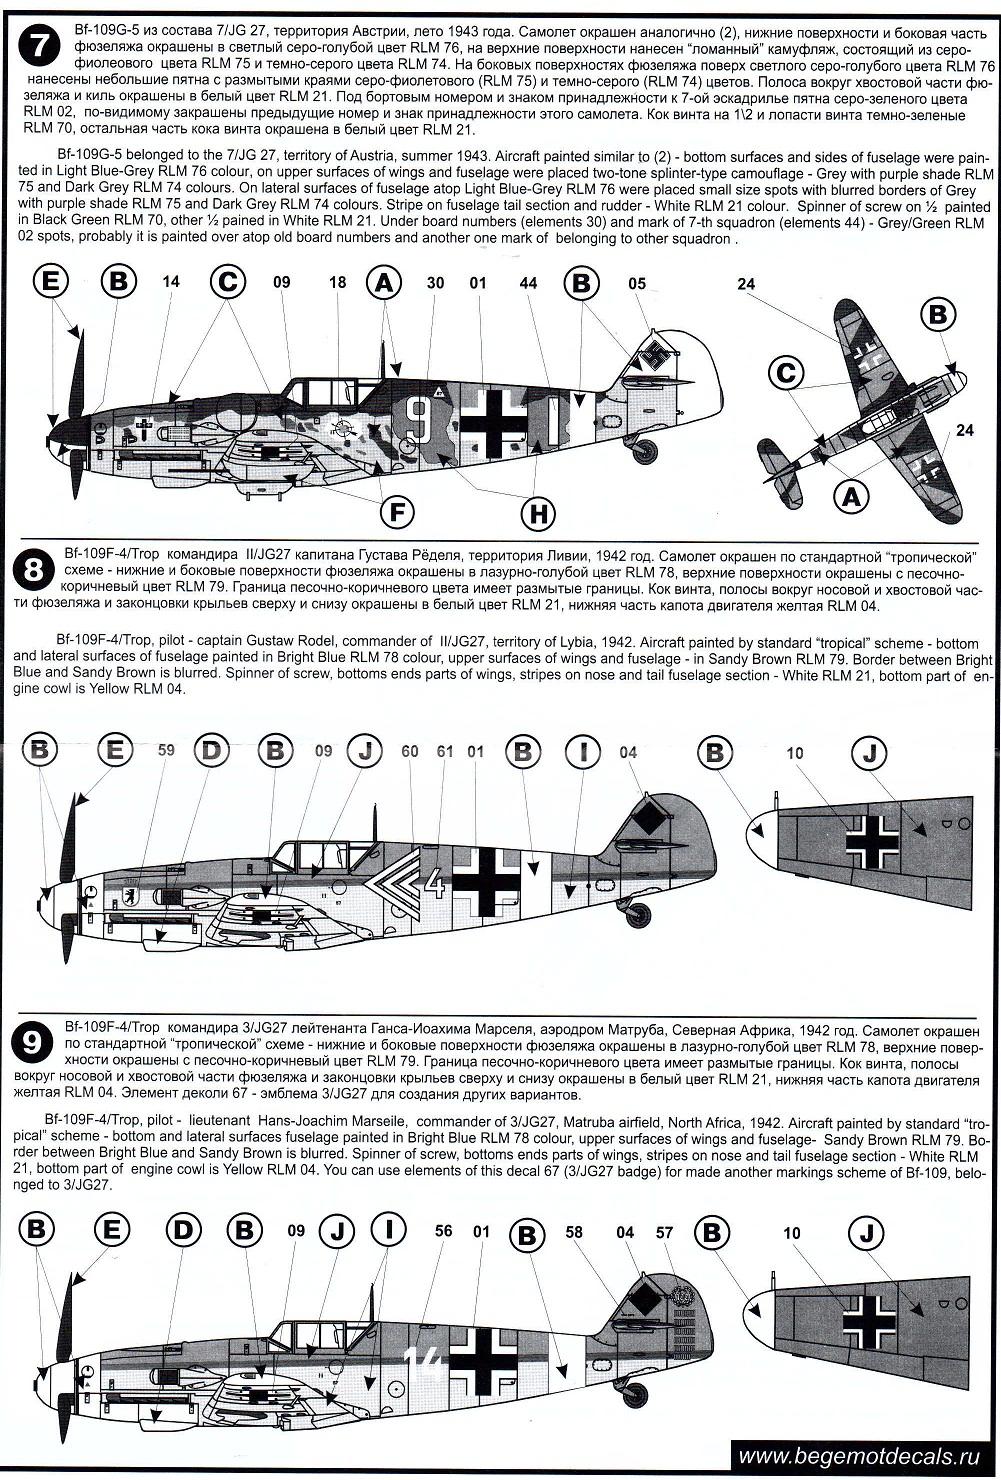 Begemot Me-109 F,G rajz-3 (2)

1/72 Begemot Me-109 F-G 
